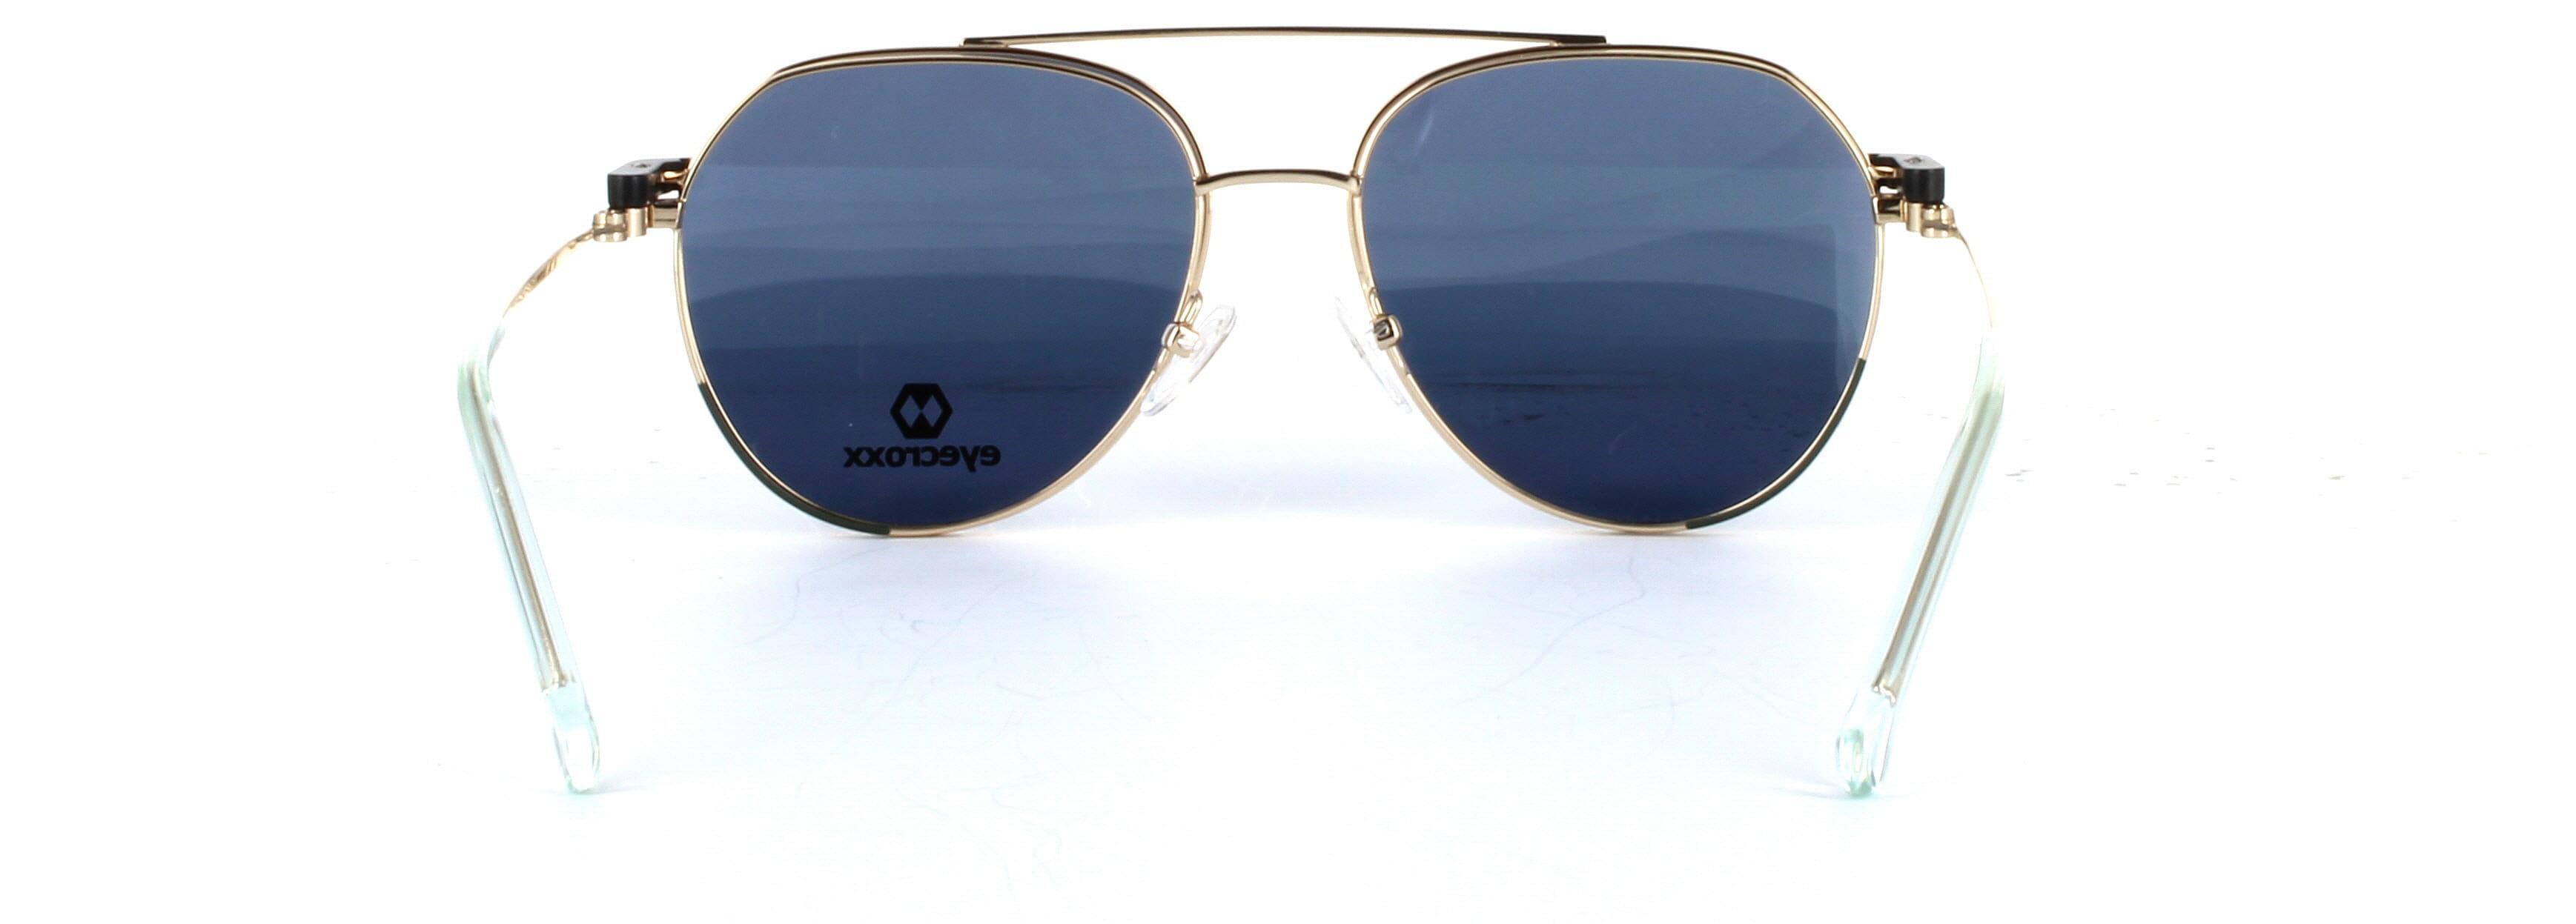 Eyecroxx 612 Gold and Black Full Rim Metal Glasses - Image View 4